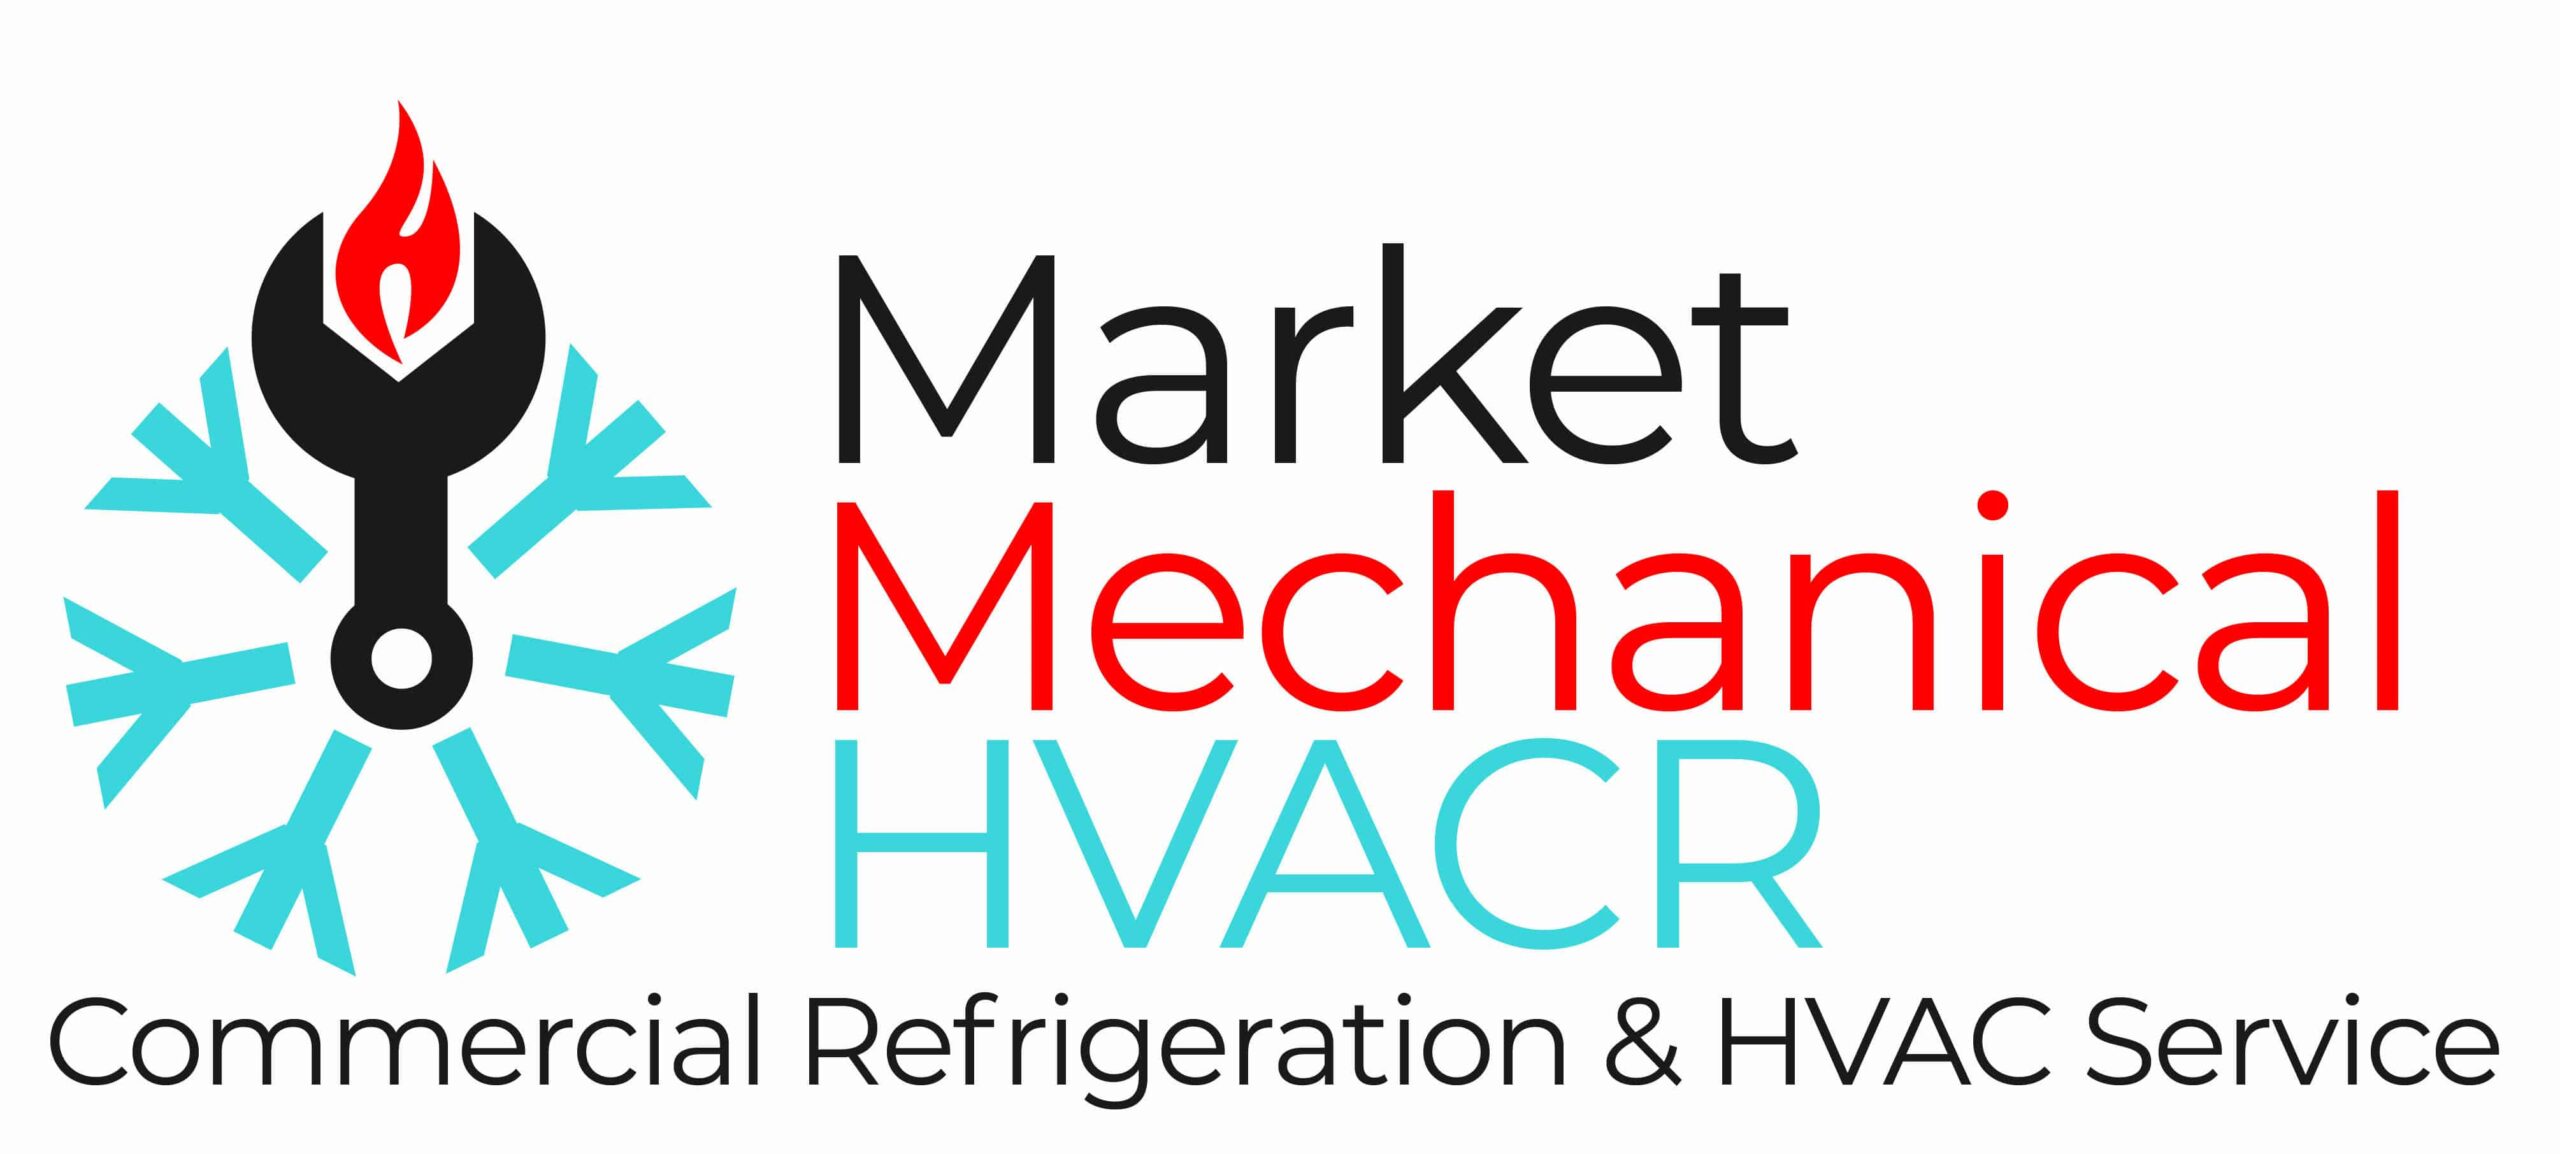 Market Mechanical HVAC